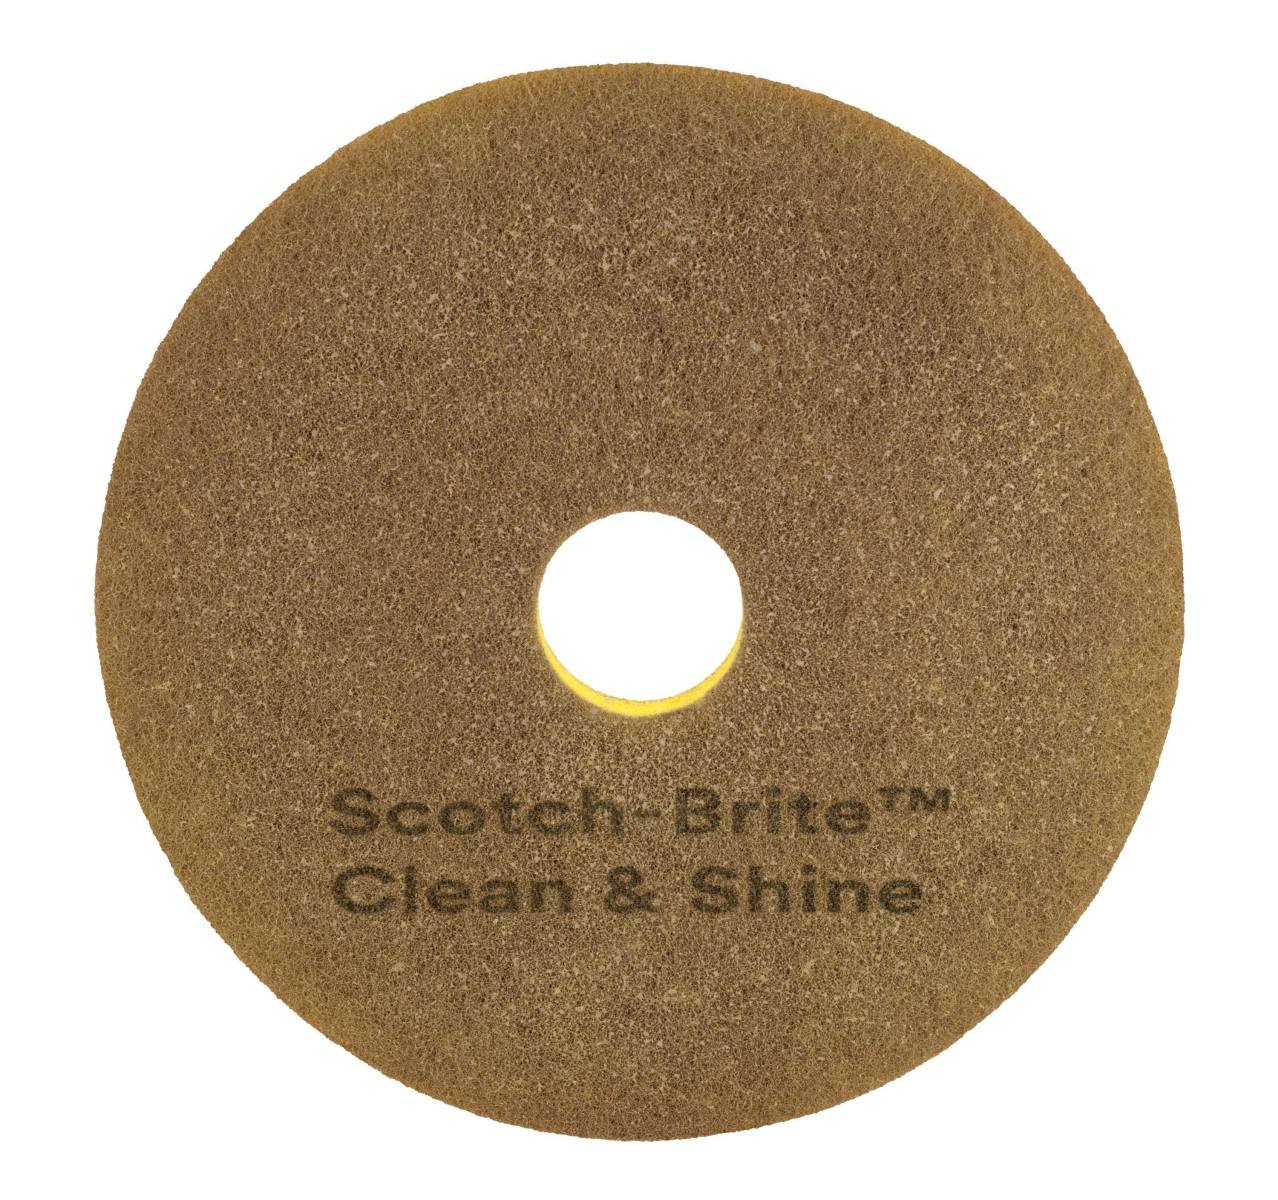 3M Scotch-Brite Clean & Shine Maschinenpad, 305 mm, 5 Stück / Karton